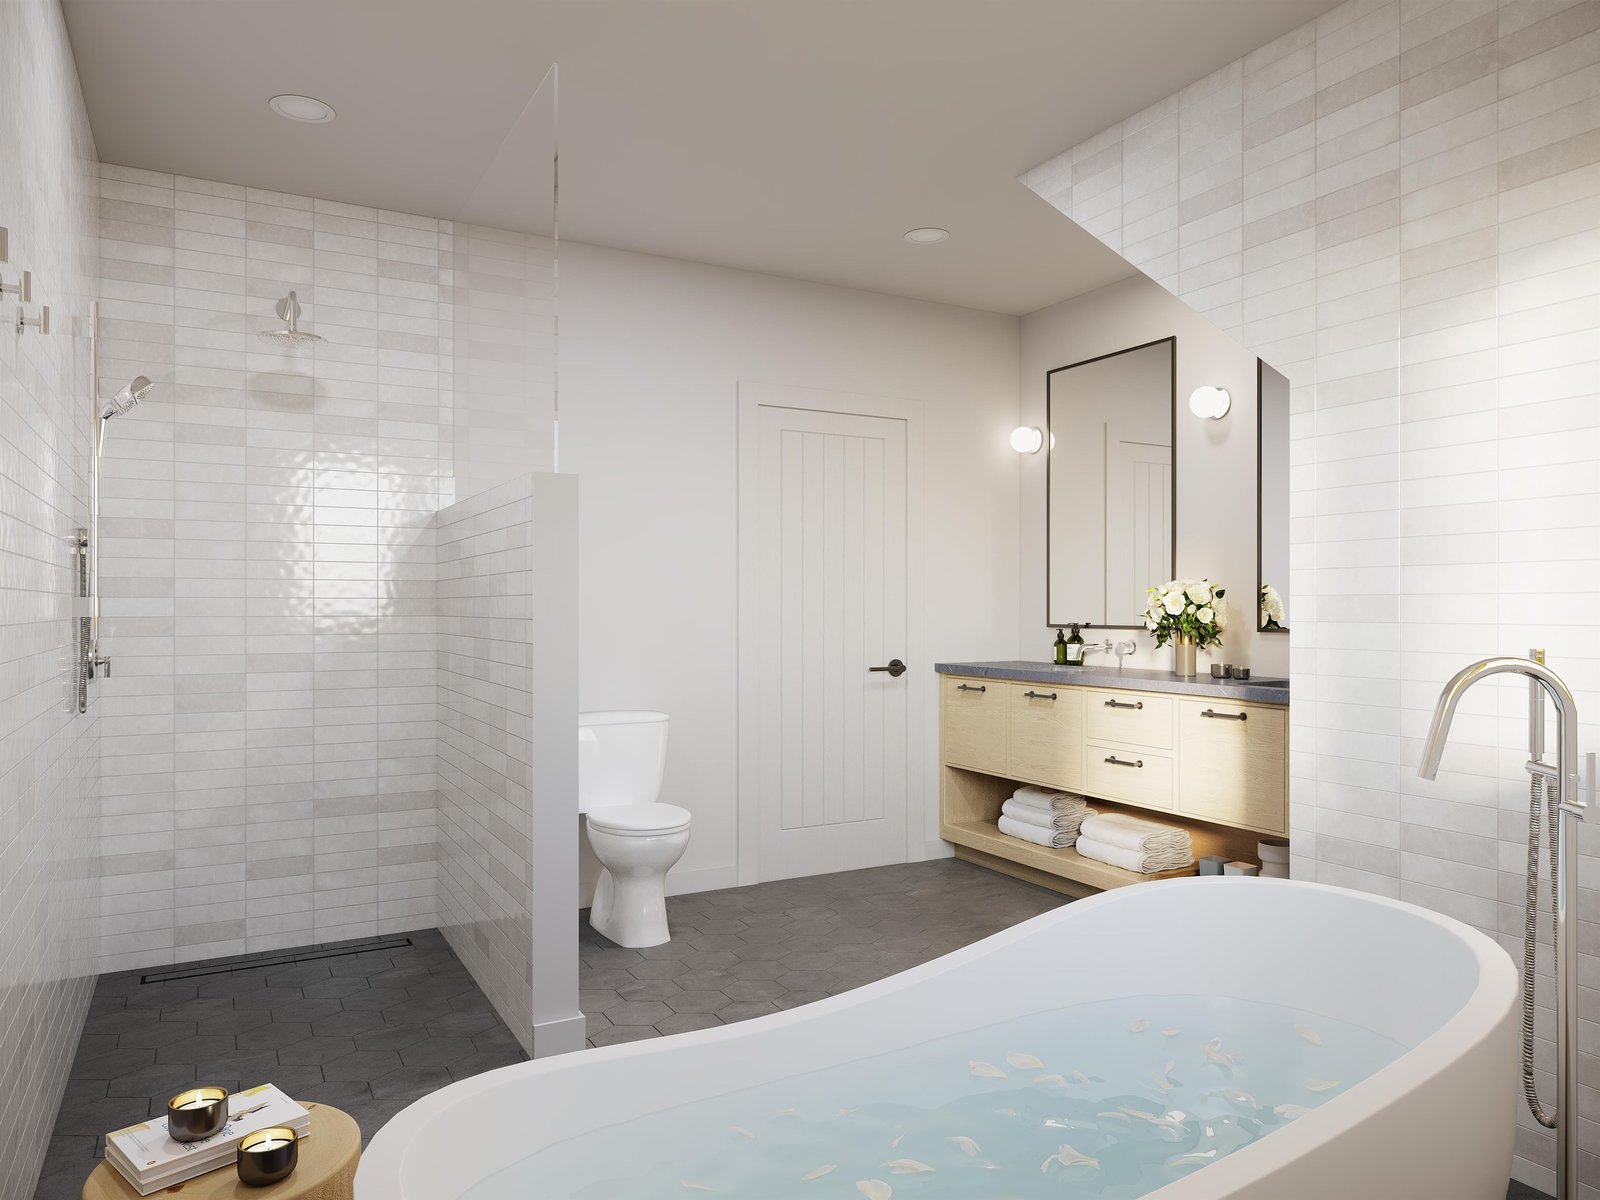 Luxurious bathroom with soaking tub